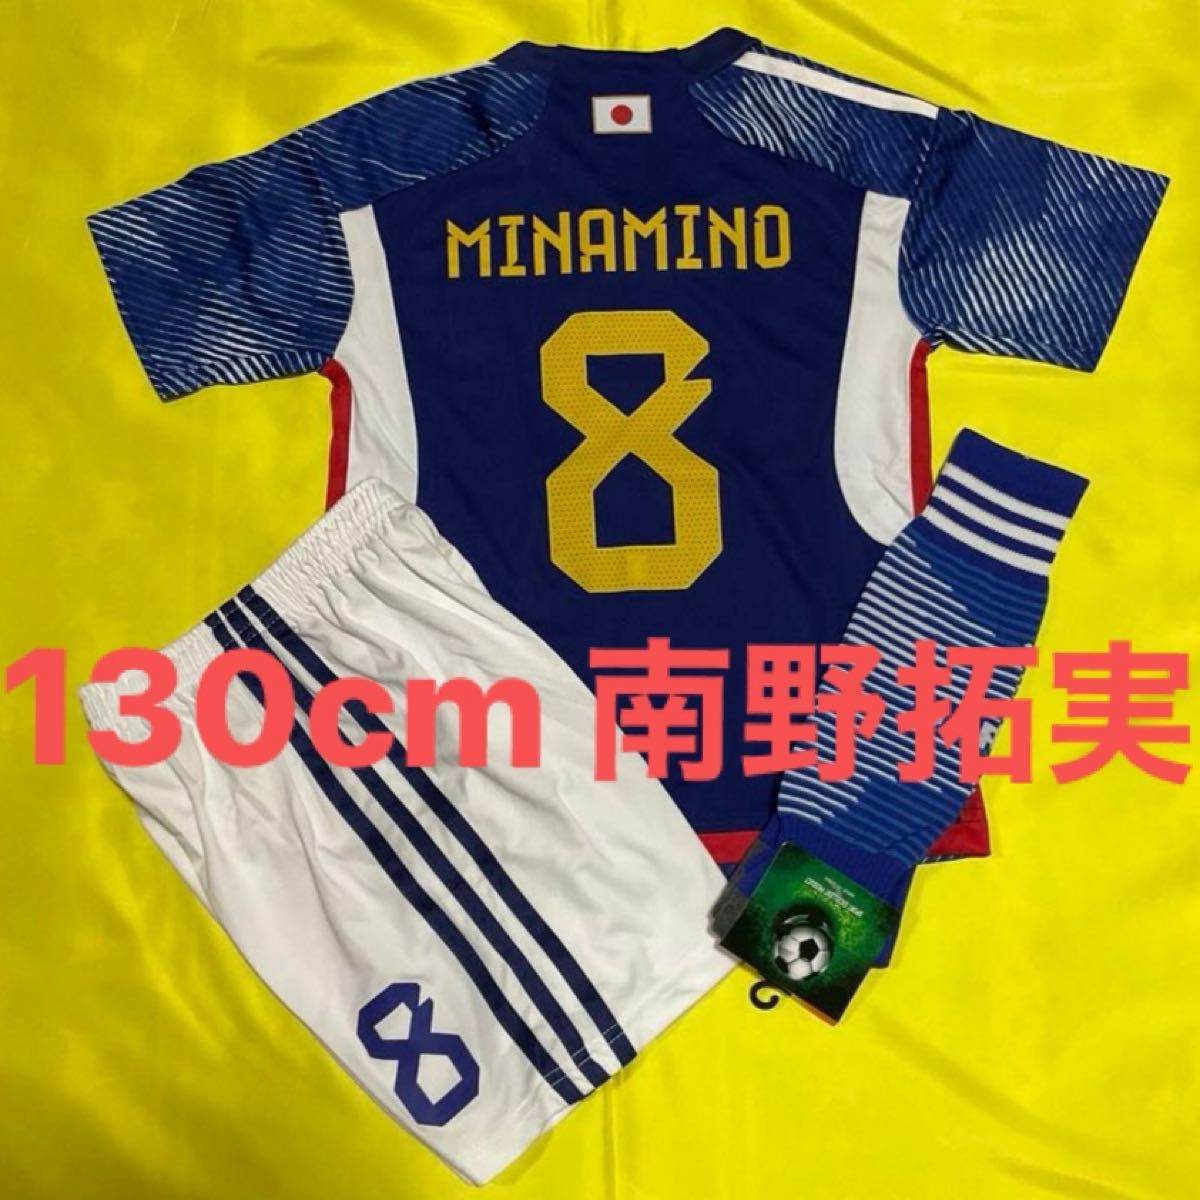 130cm 日本代表 8番 南野拓実 子供サッカーユニフォーム ソックスセット キッズ